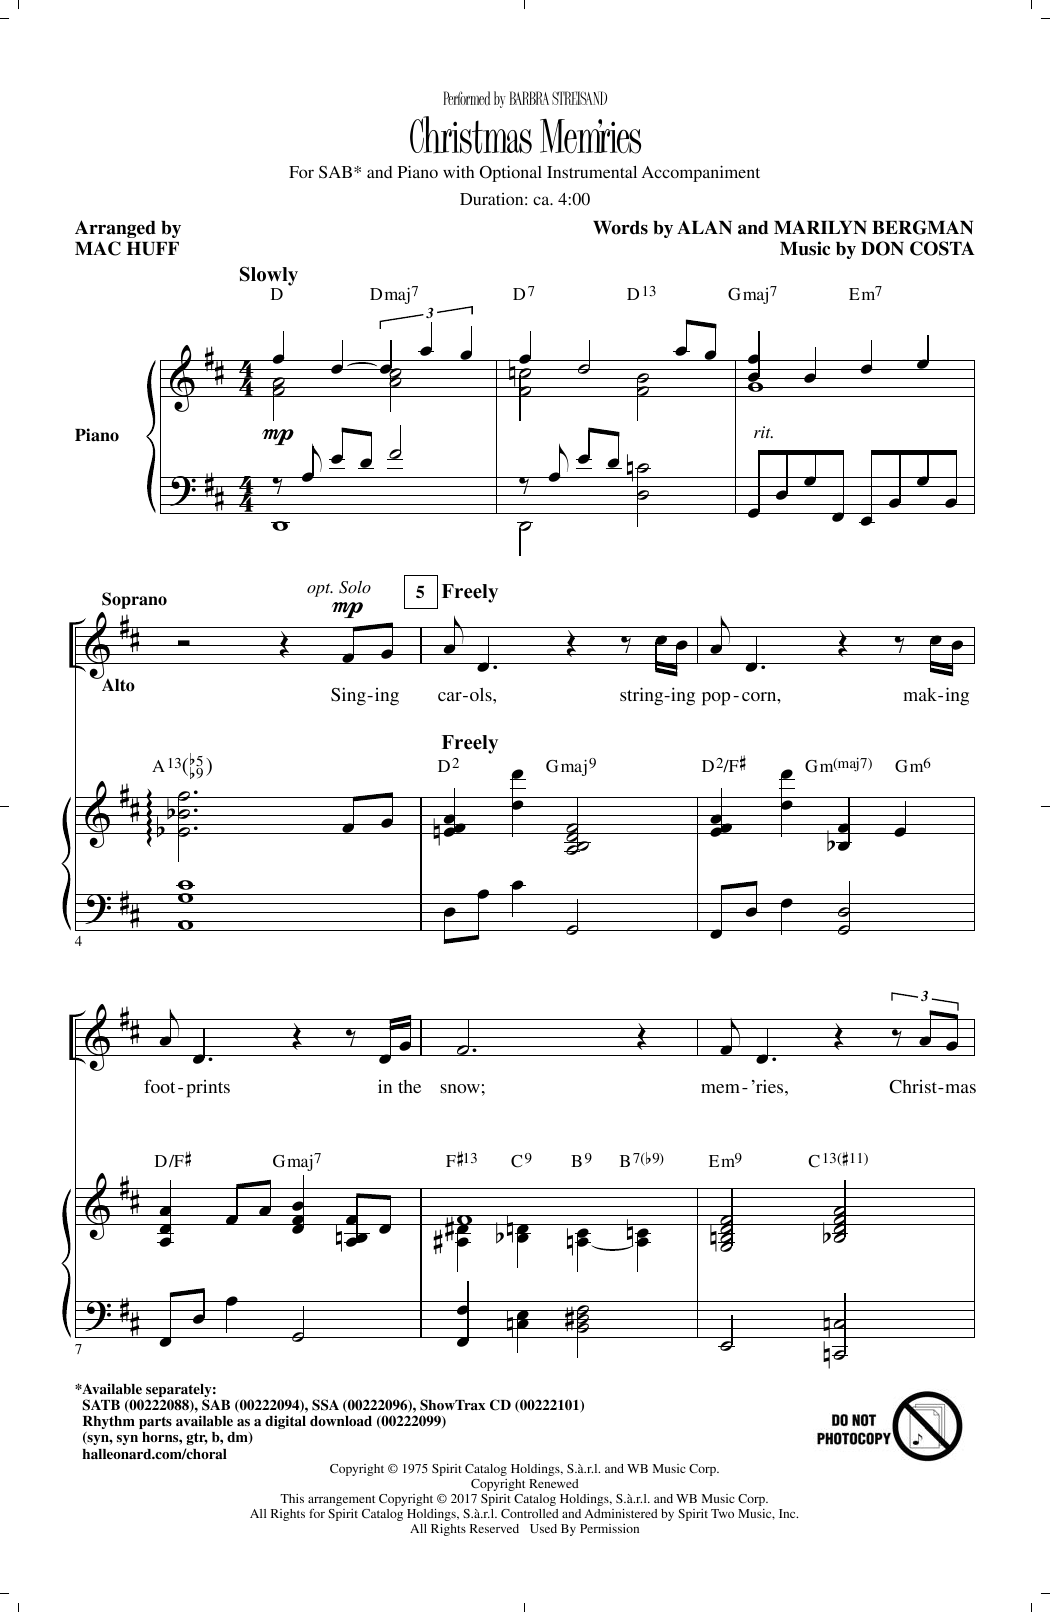 Barbra Streisand Christmas Mem'ries (arr. Mac Huff) sheet music notes and chords arranged for SATB Choir